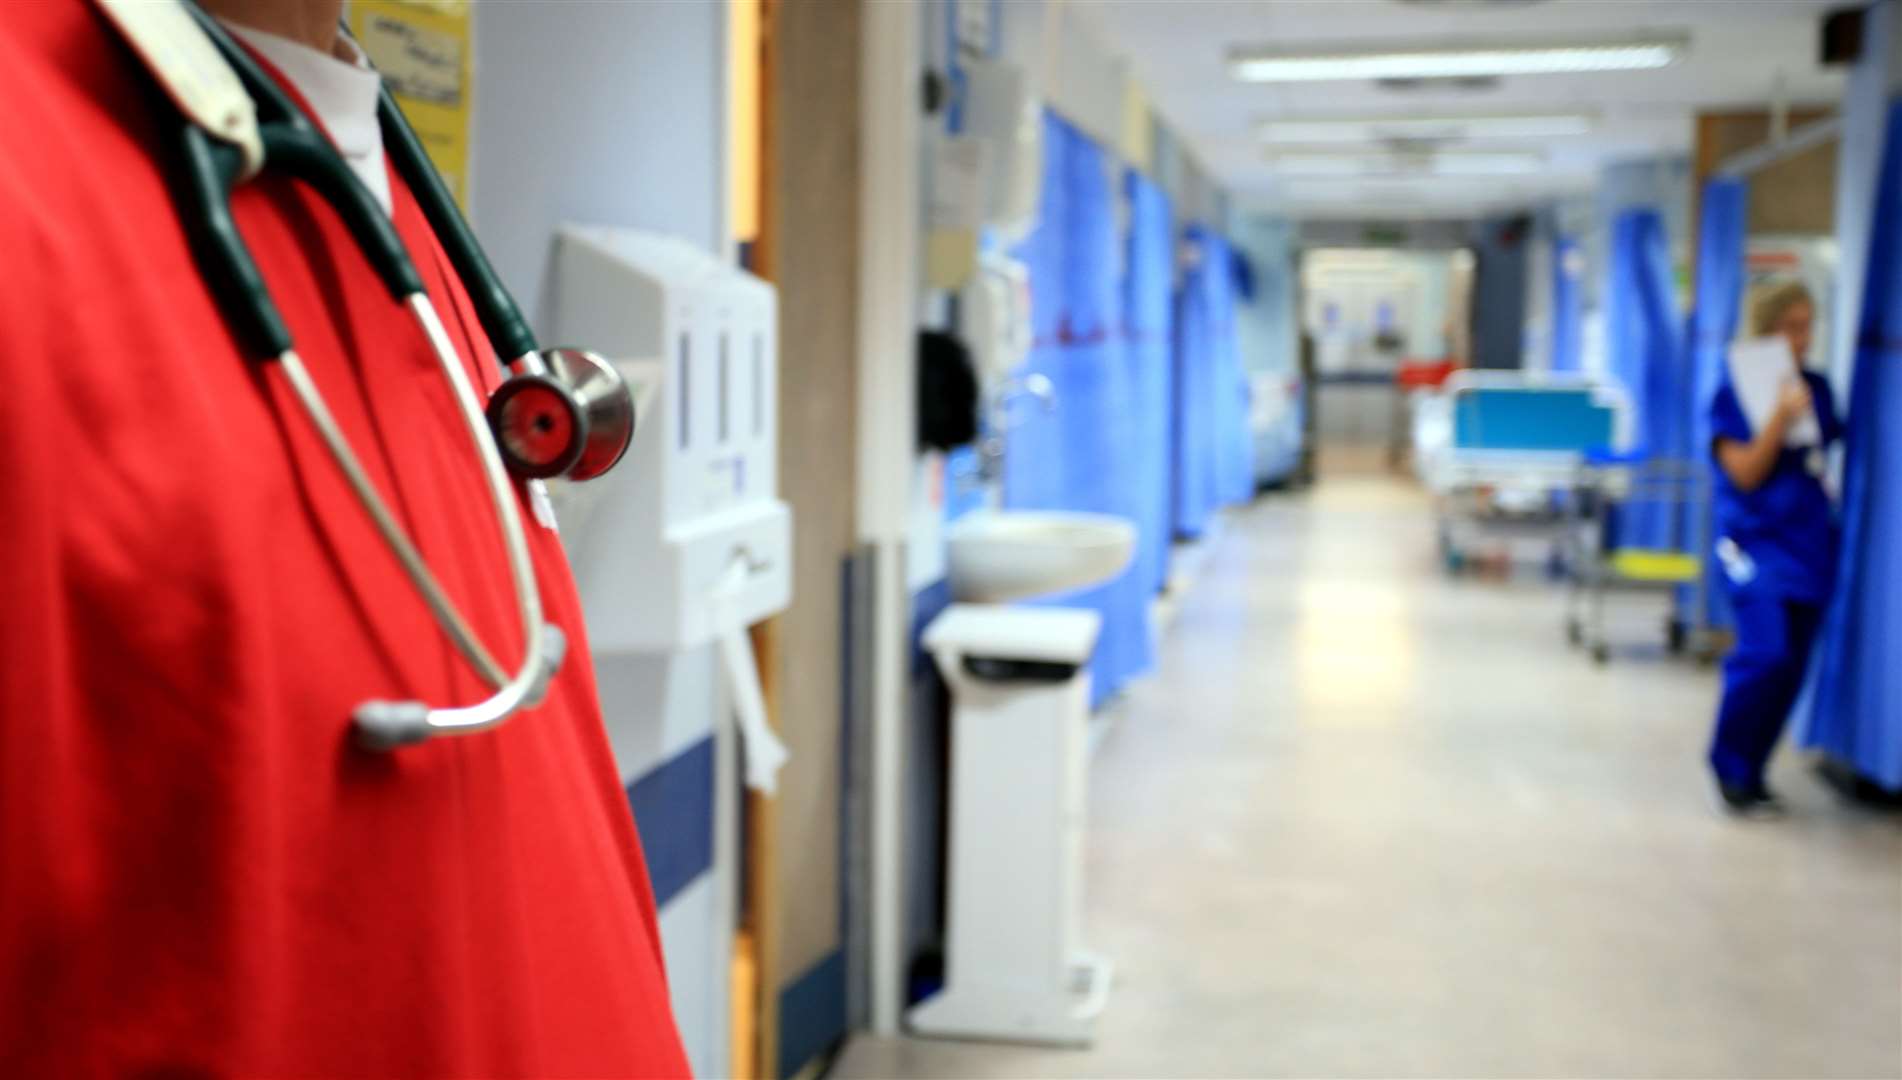 Calling nurses 'selfish' is ignorance, writes one reader Stock picture